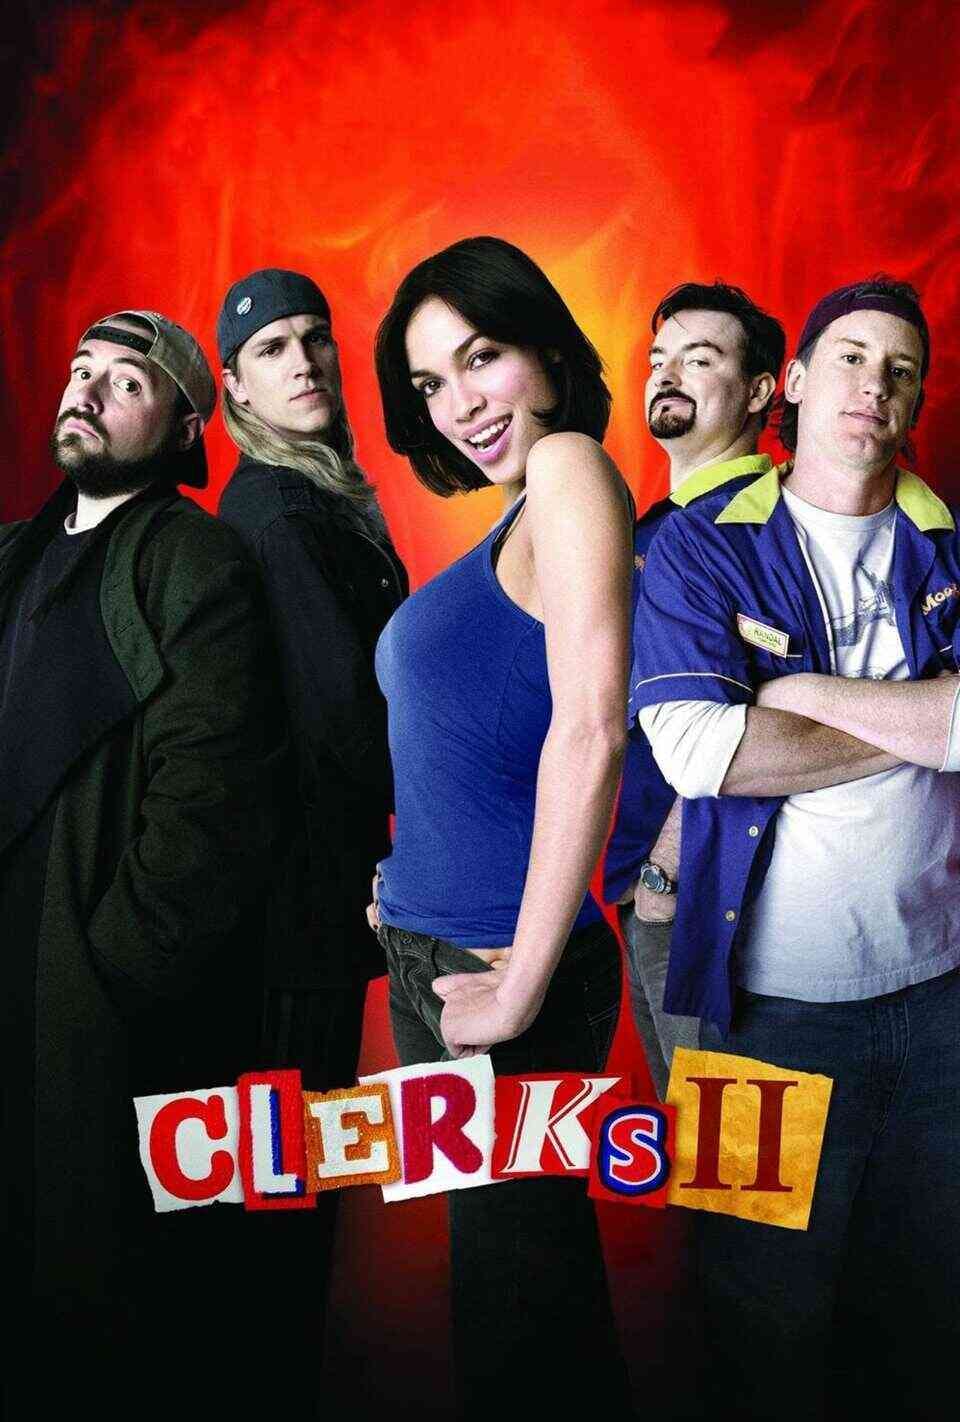 Read Clerks II screenplay (poster)